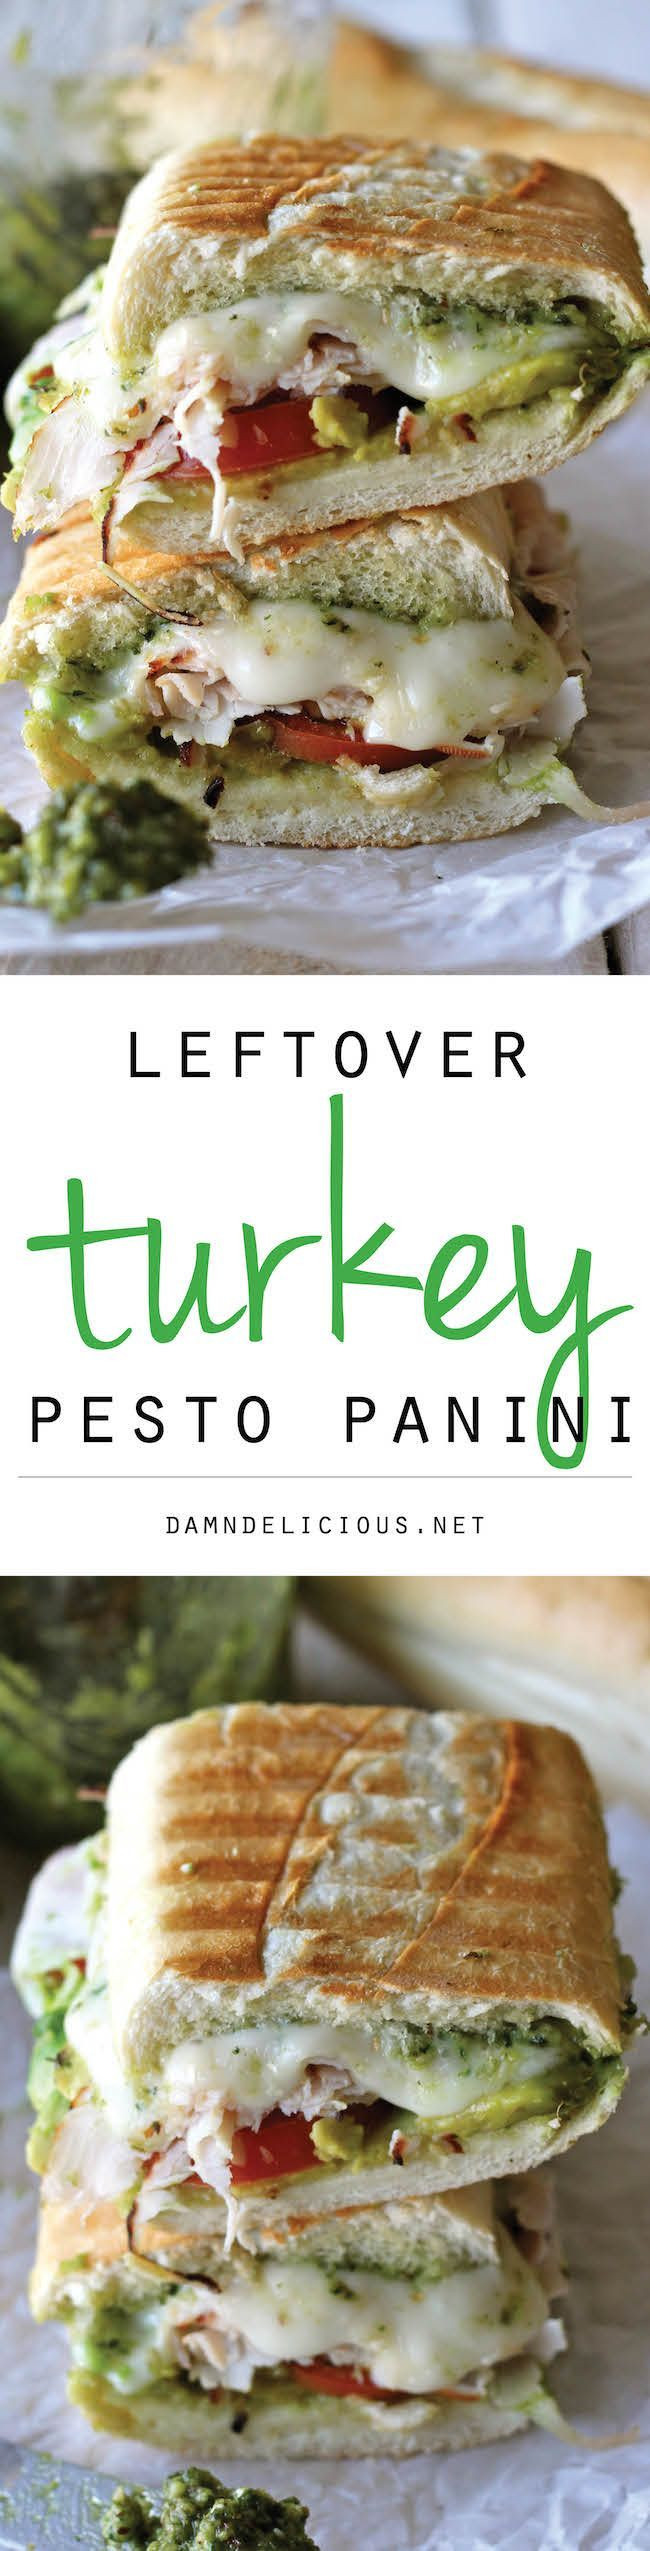 Turkey Pesto Panini Recipe
 Leftover Thanksgiving Turkey Pesto Panini